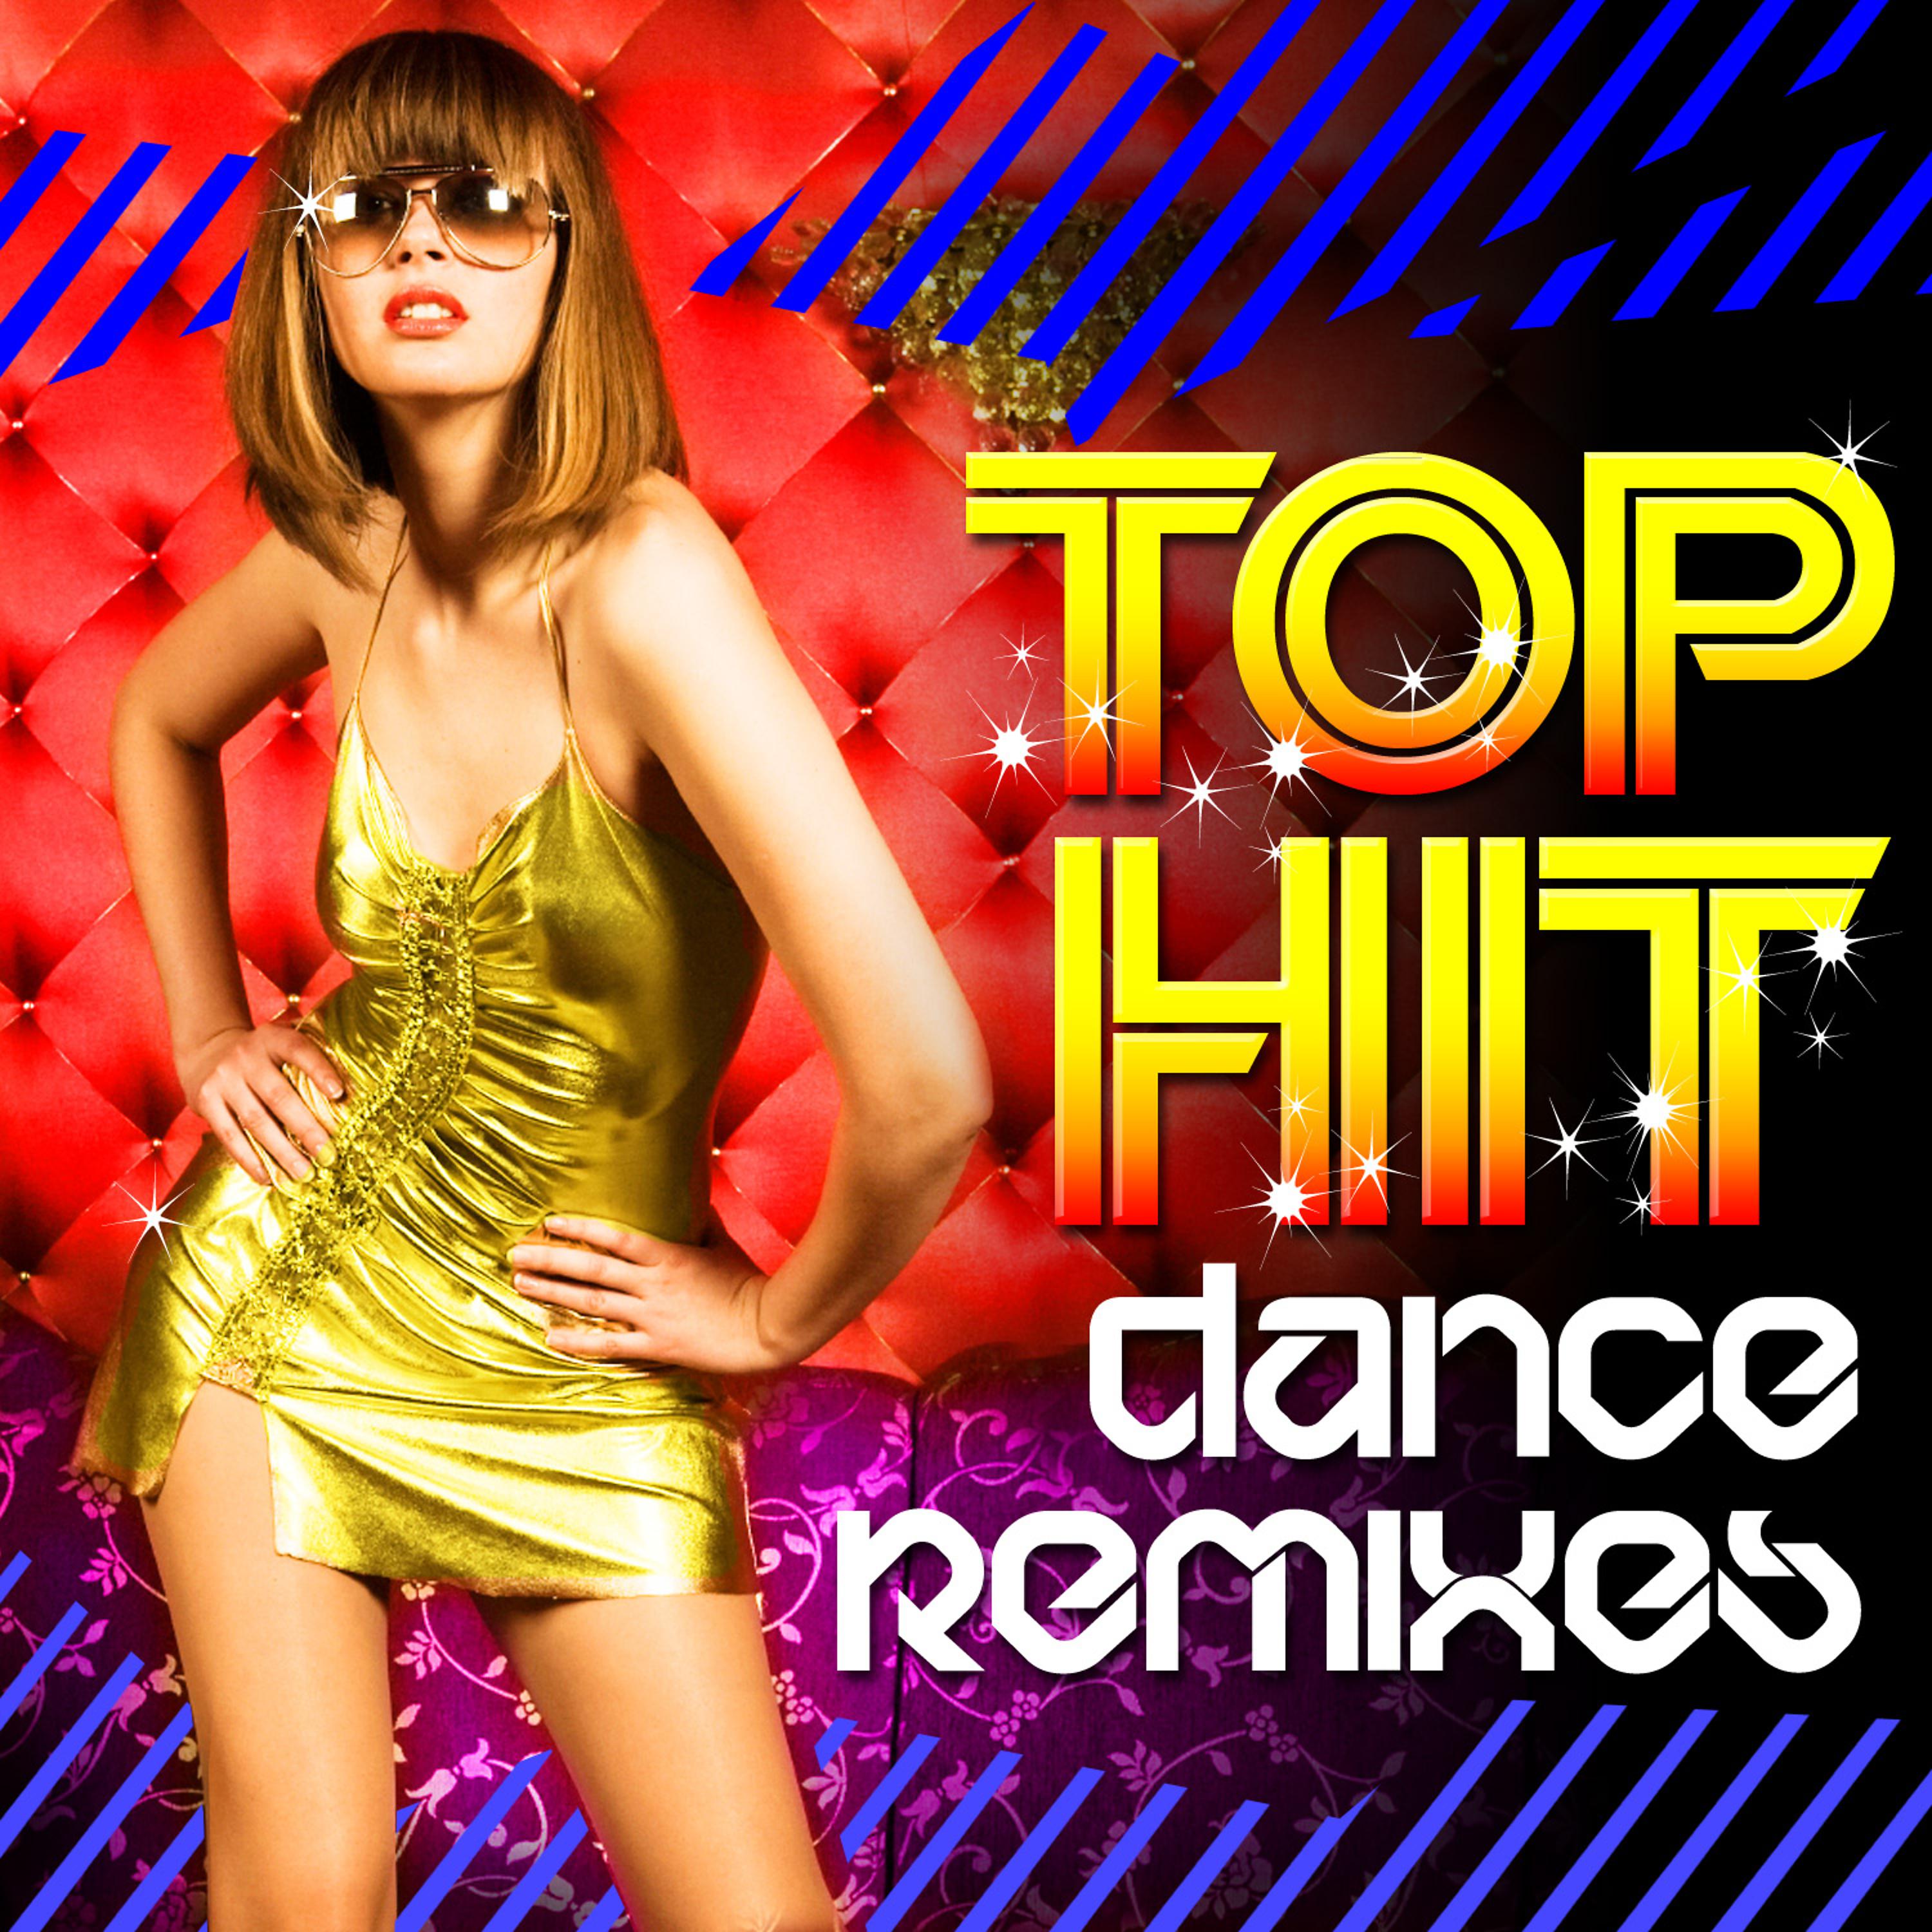 Dance remix mp3. Dance Remixes. Паранойя дэнс ремикс. Remix Dance 128. Ремикс танец.